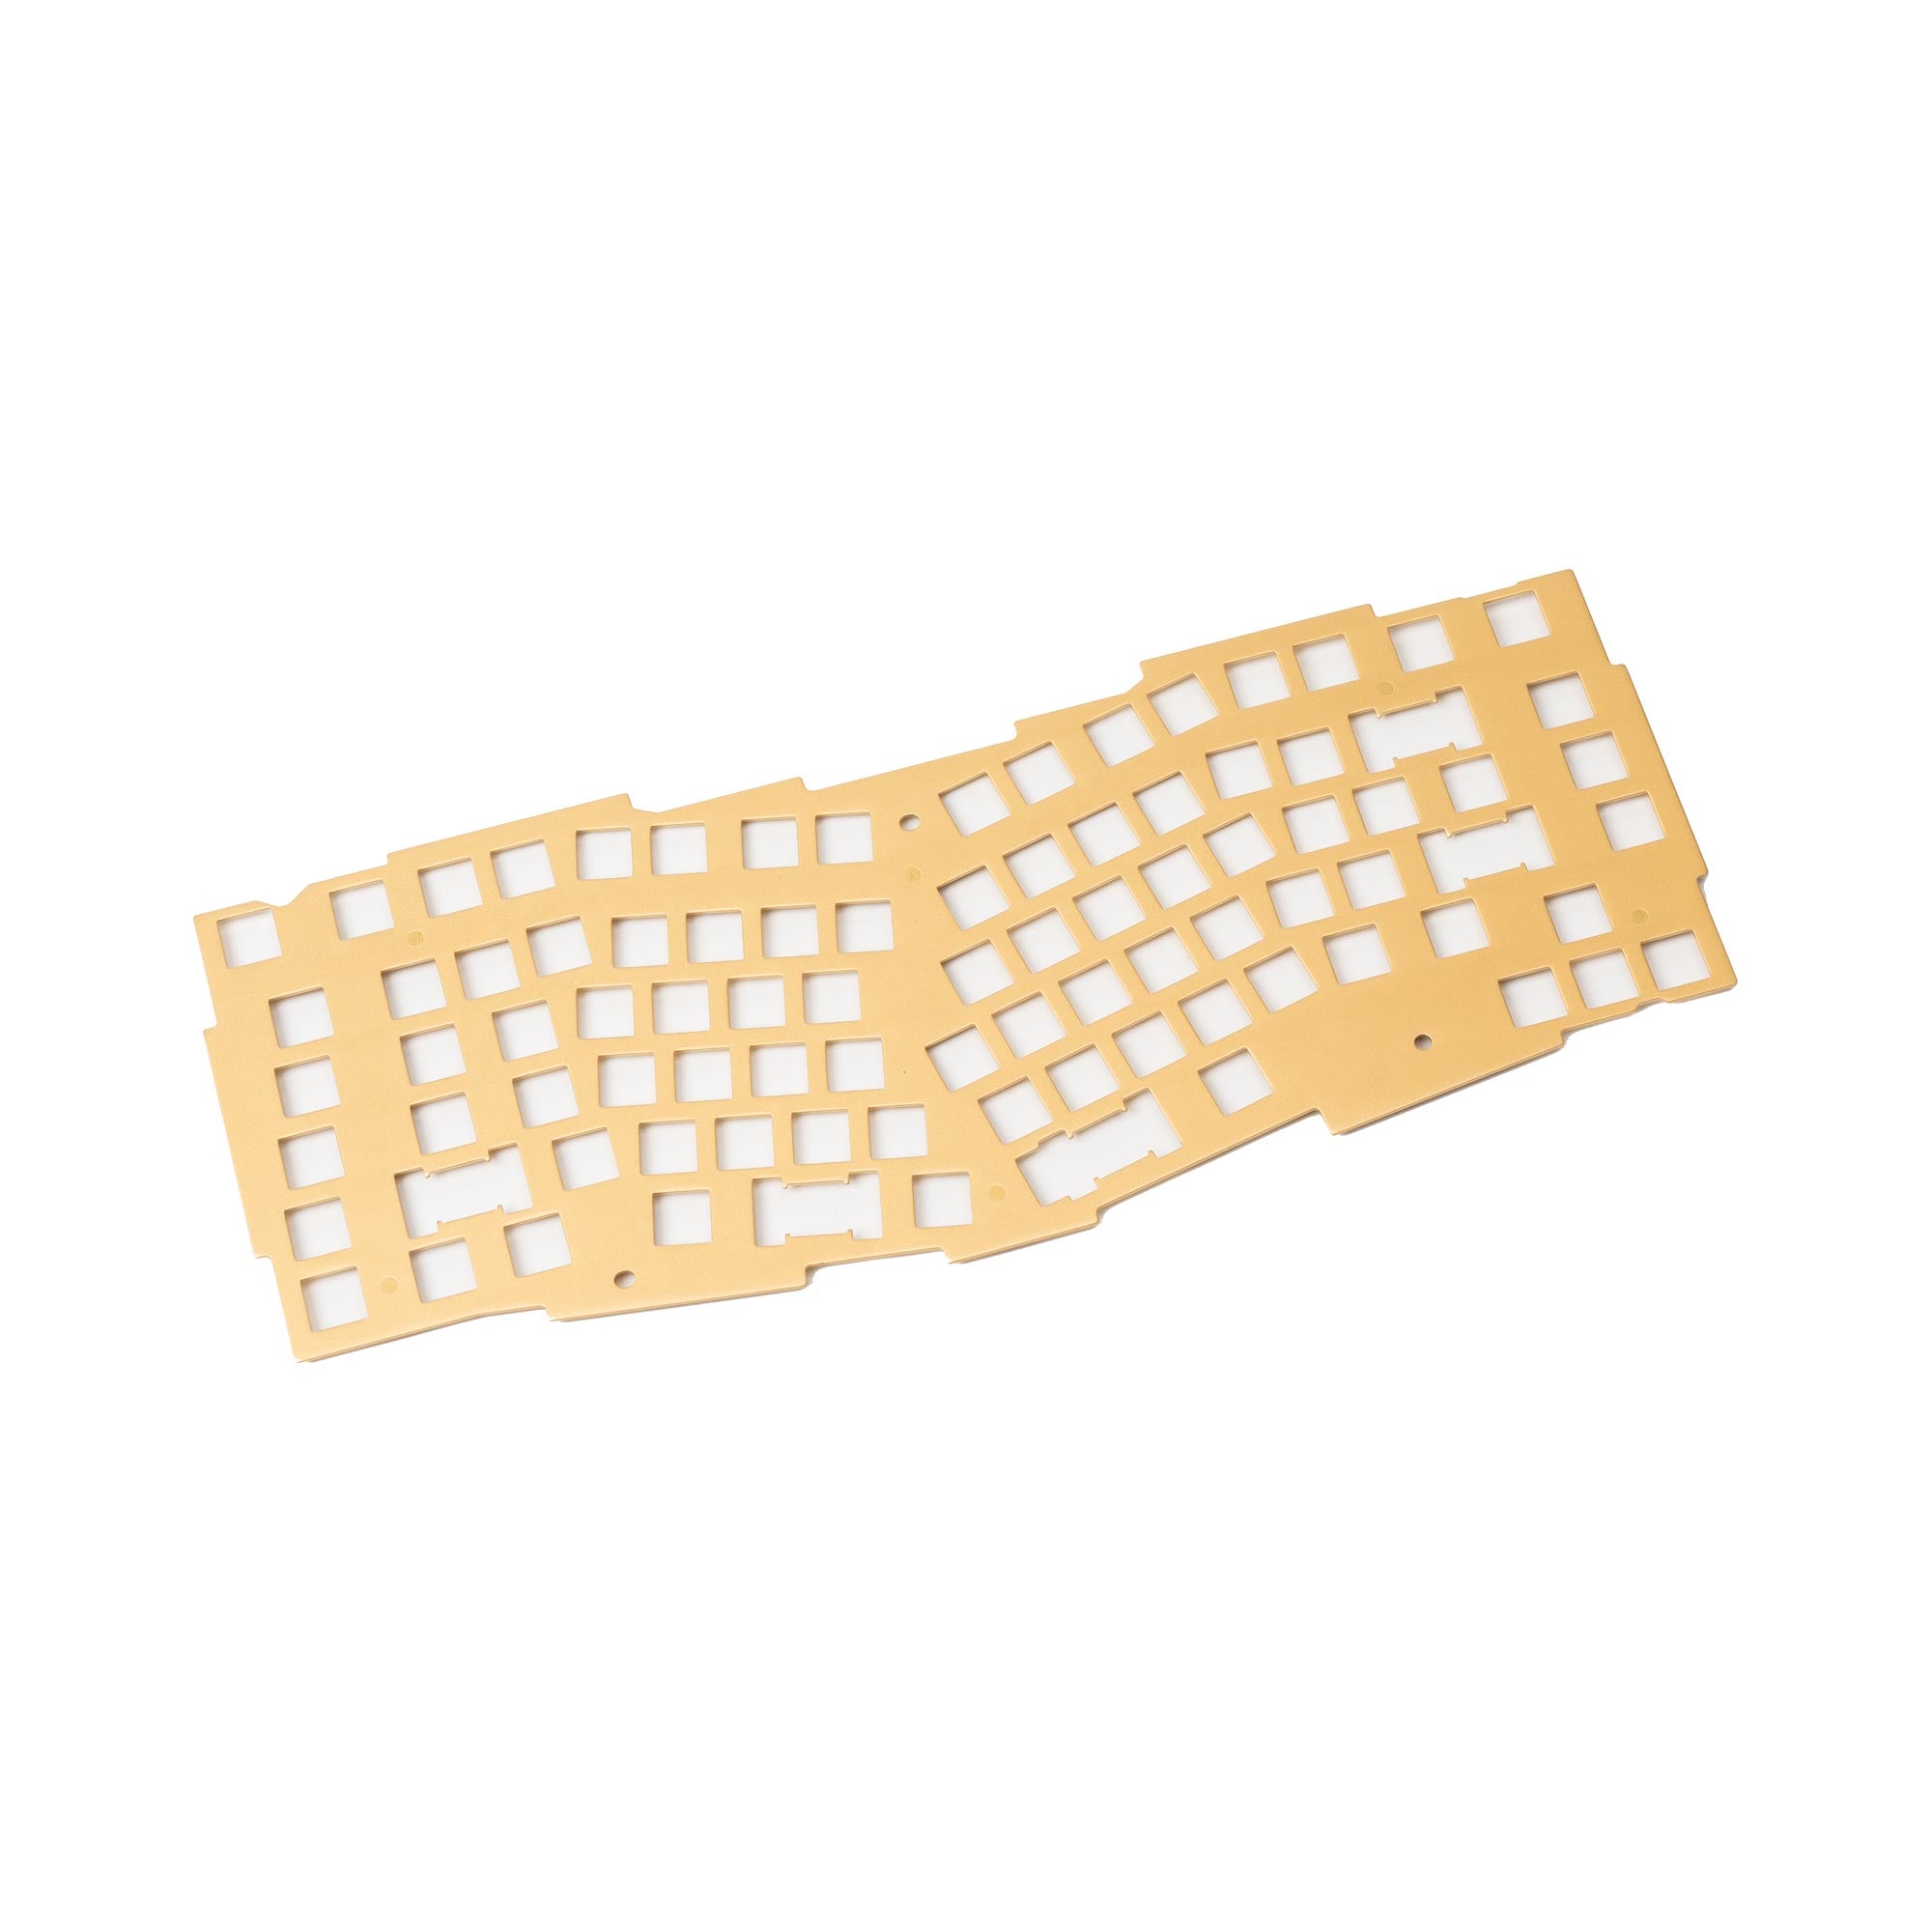 Keychron Q10 Keyboard ANSI Layout Brass Plate